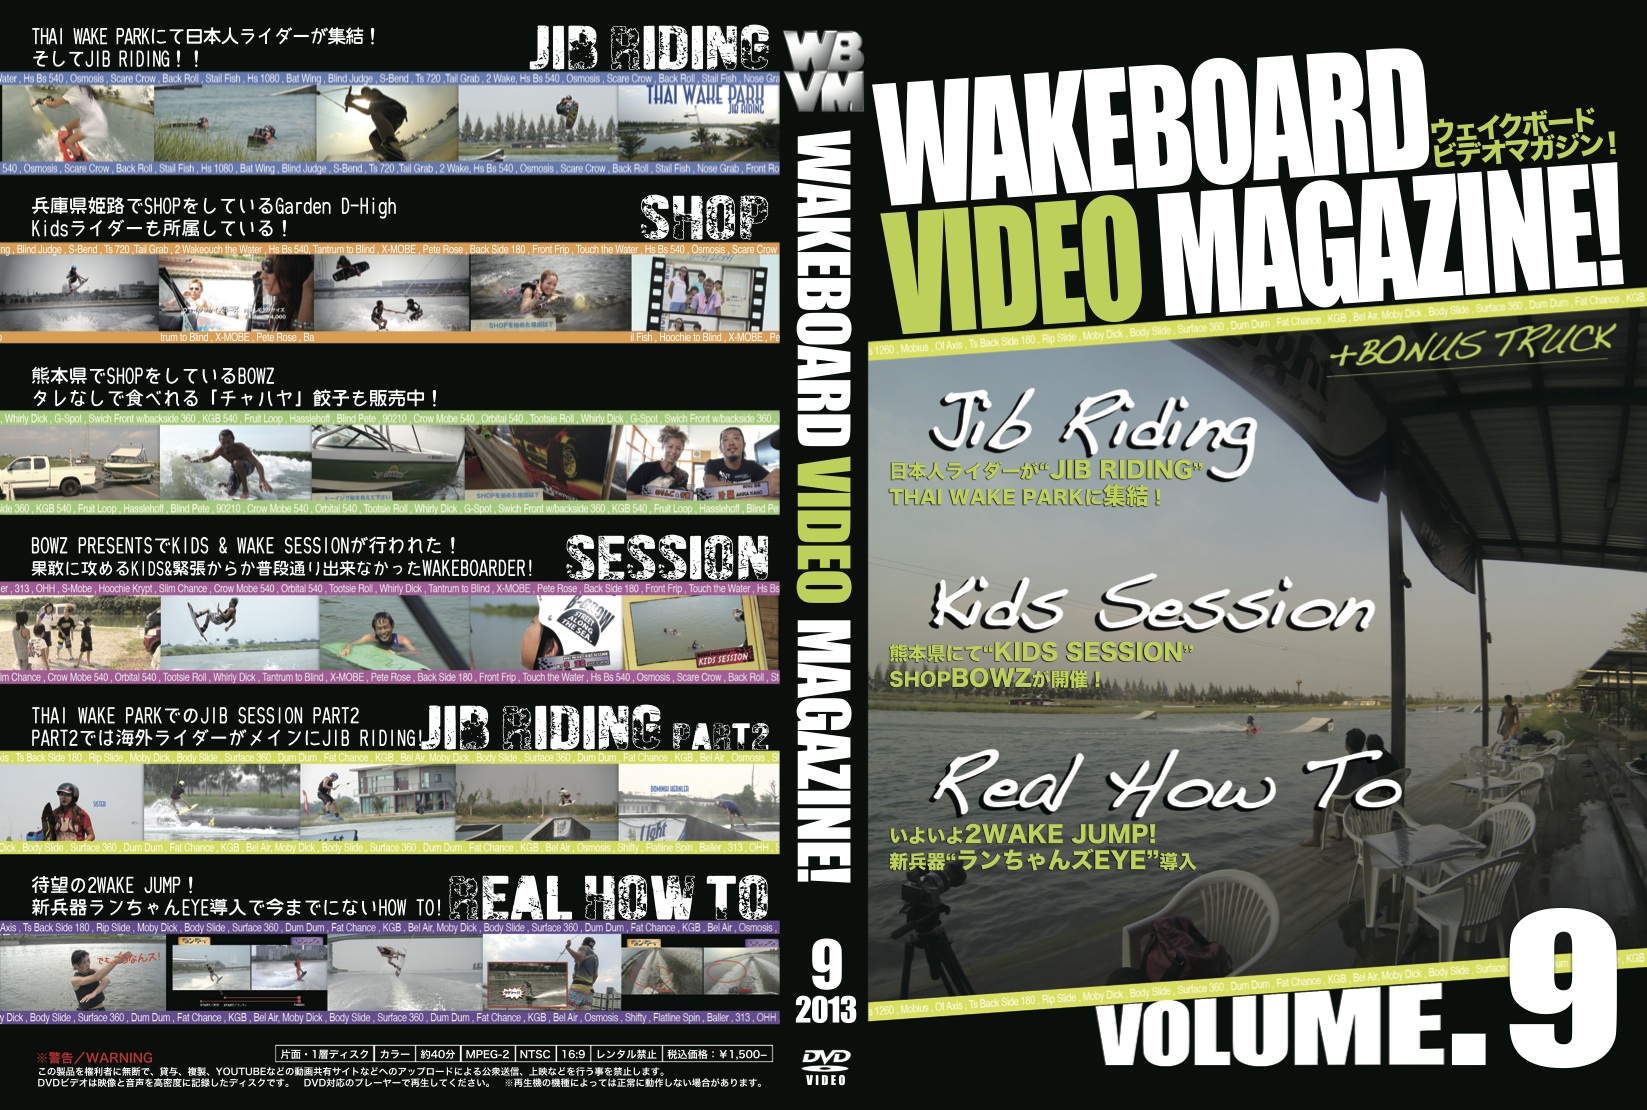 WakeBoard Video Magazine! Vol.9